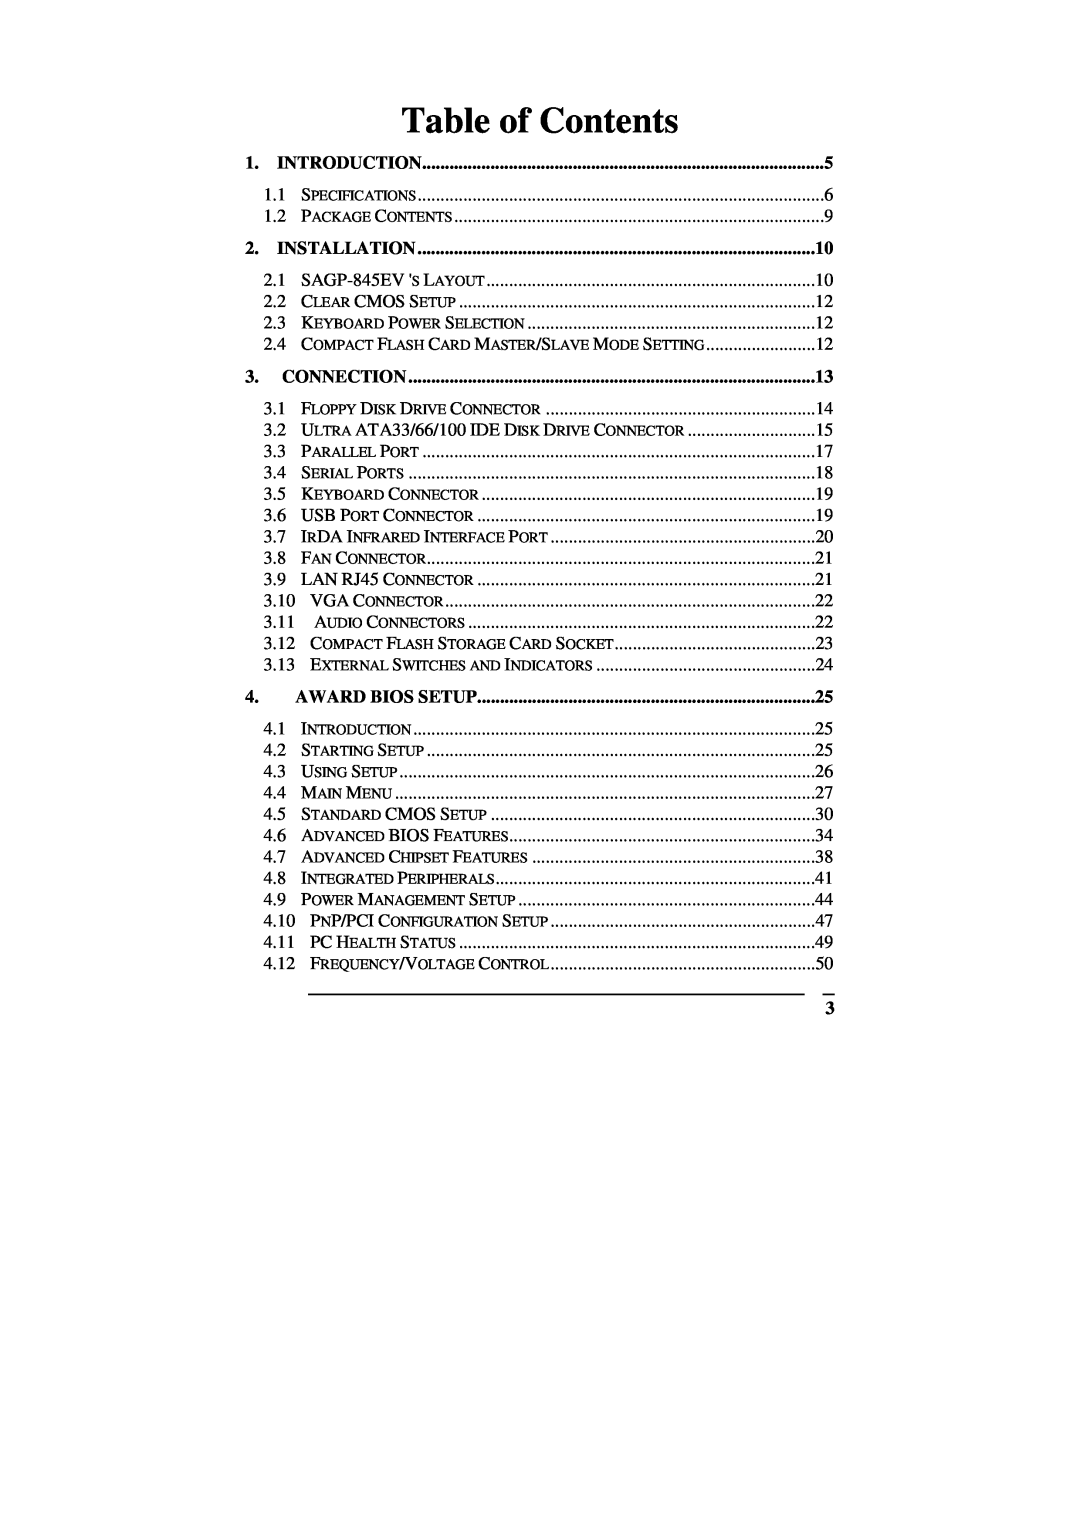 ICP DAS USA SAGP-845EV manual Table of Contents, Introduction, Installation, Connection, Award Bios Setup 